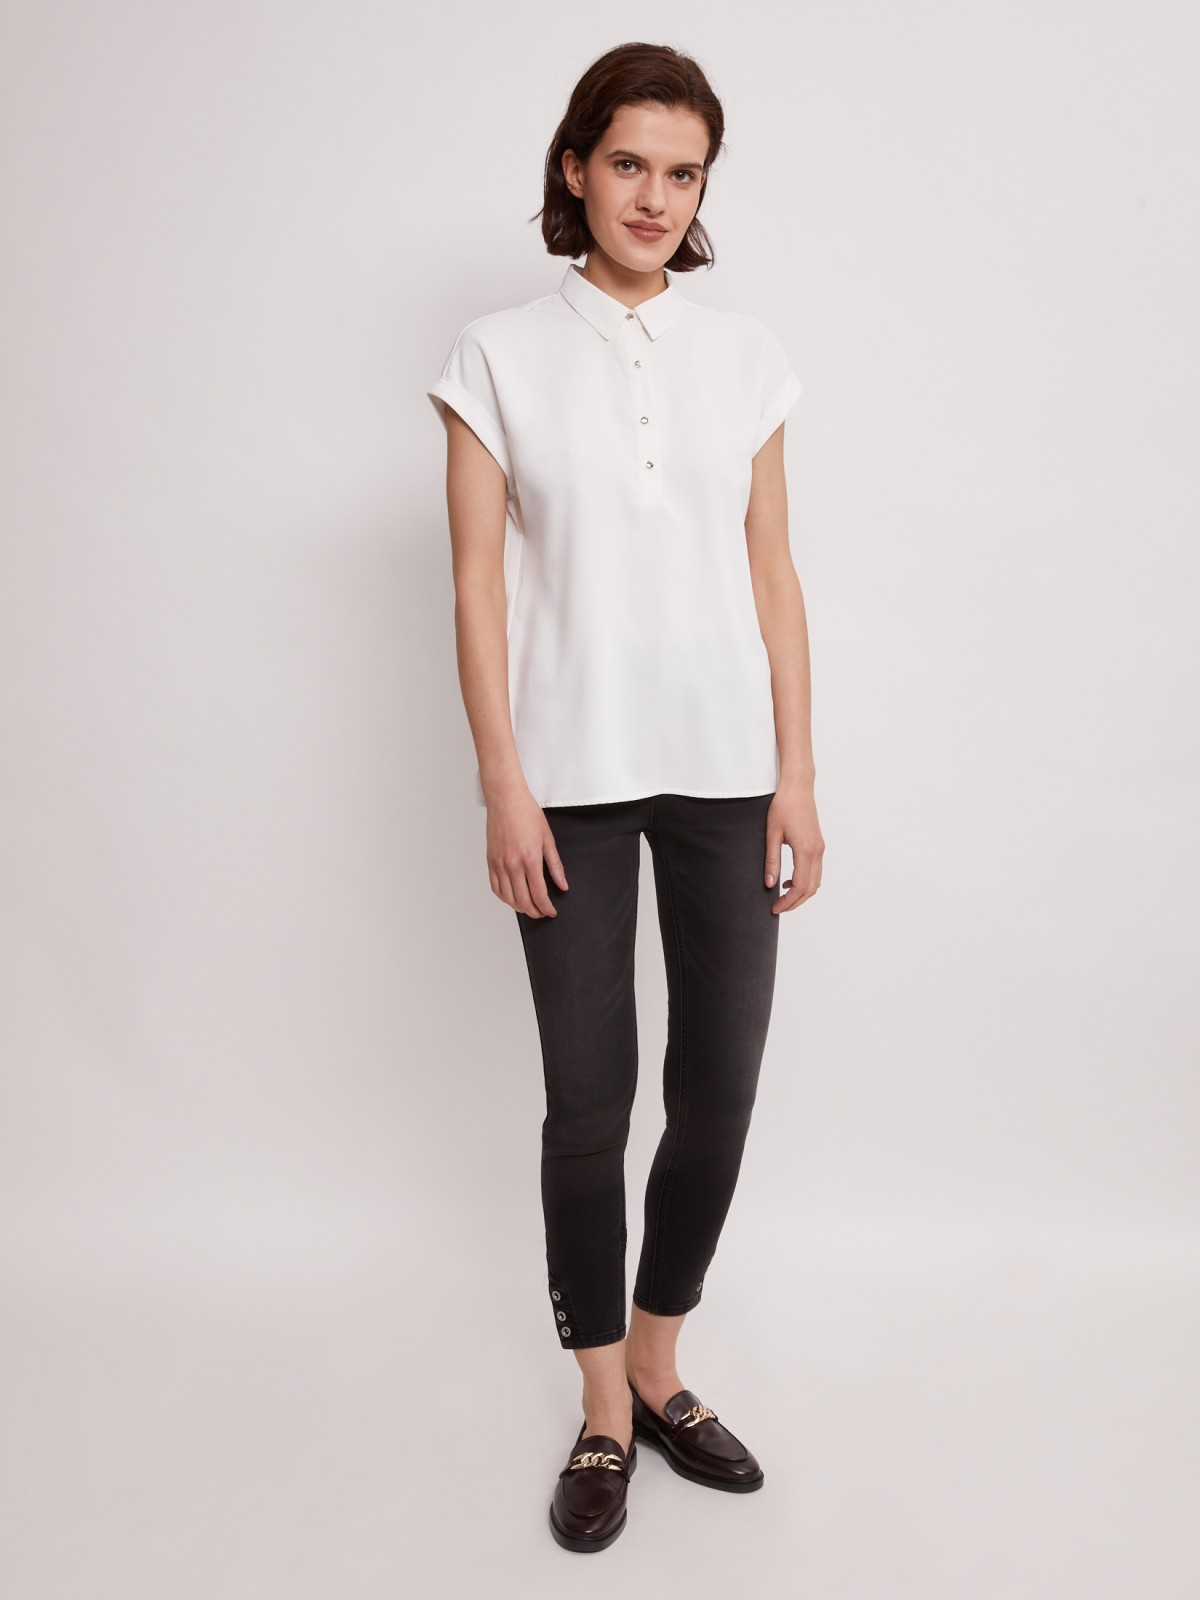 Блузка с короткими рукавами zolla 02121128Y012, цвет белый, размер XS - фото 1